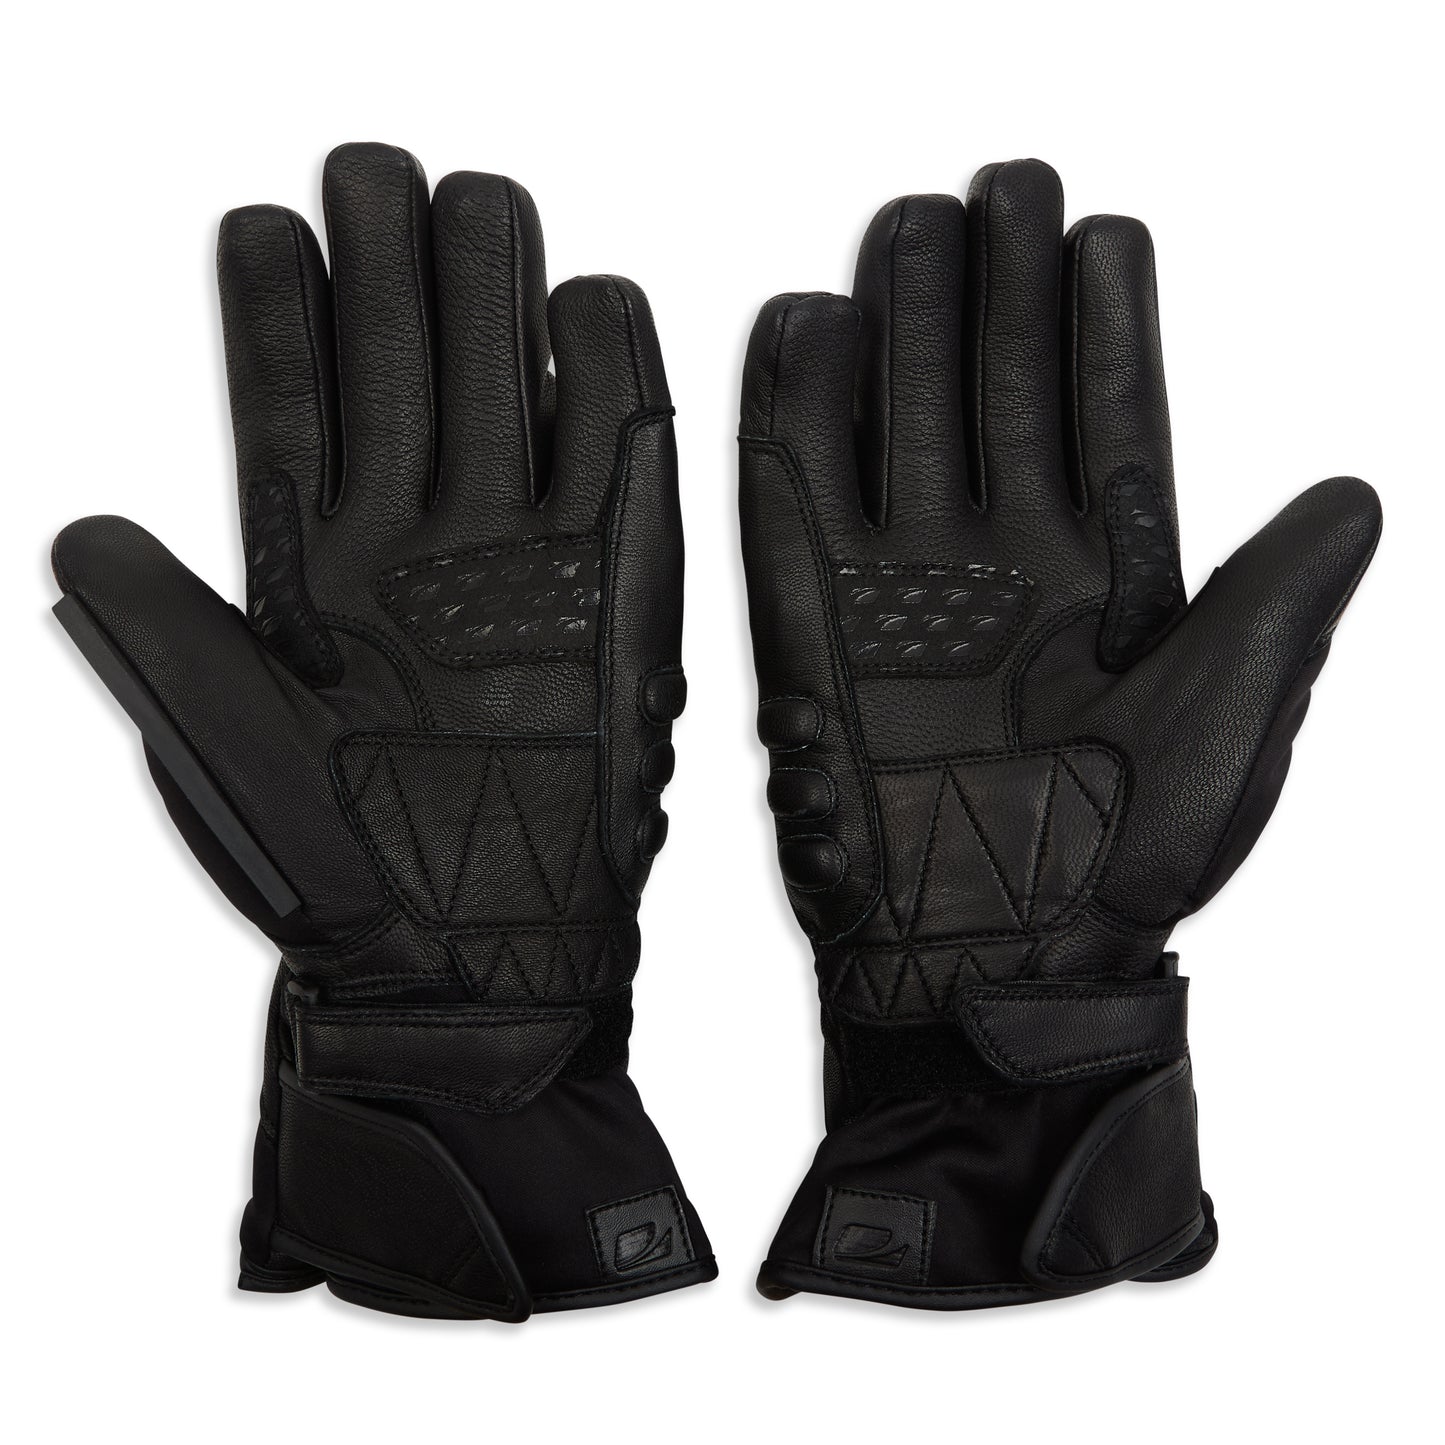 Spada Shadow Winter Motorcycle Gloves